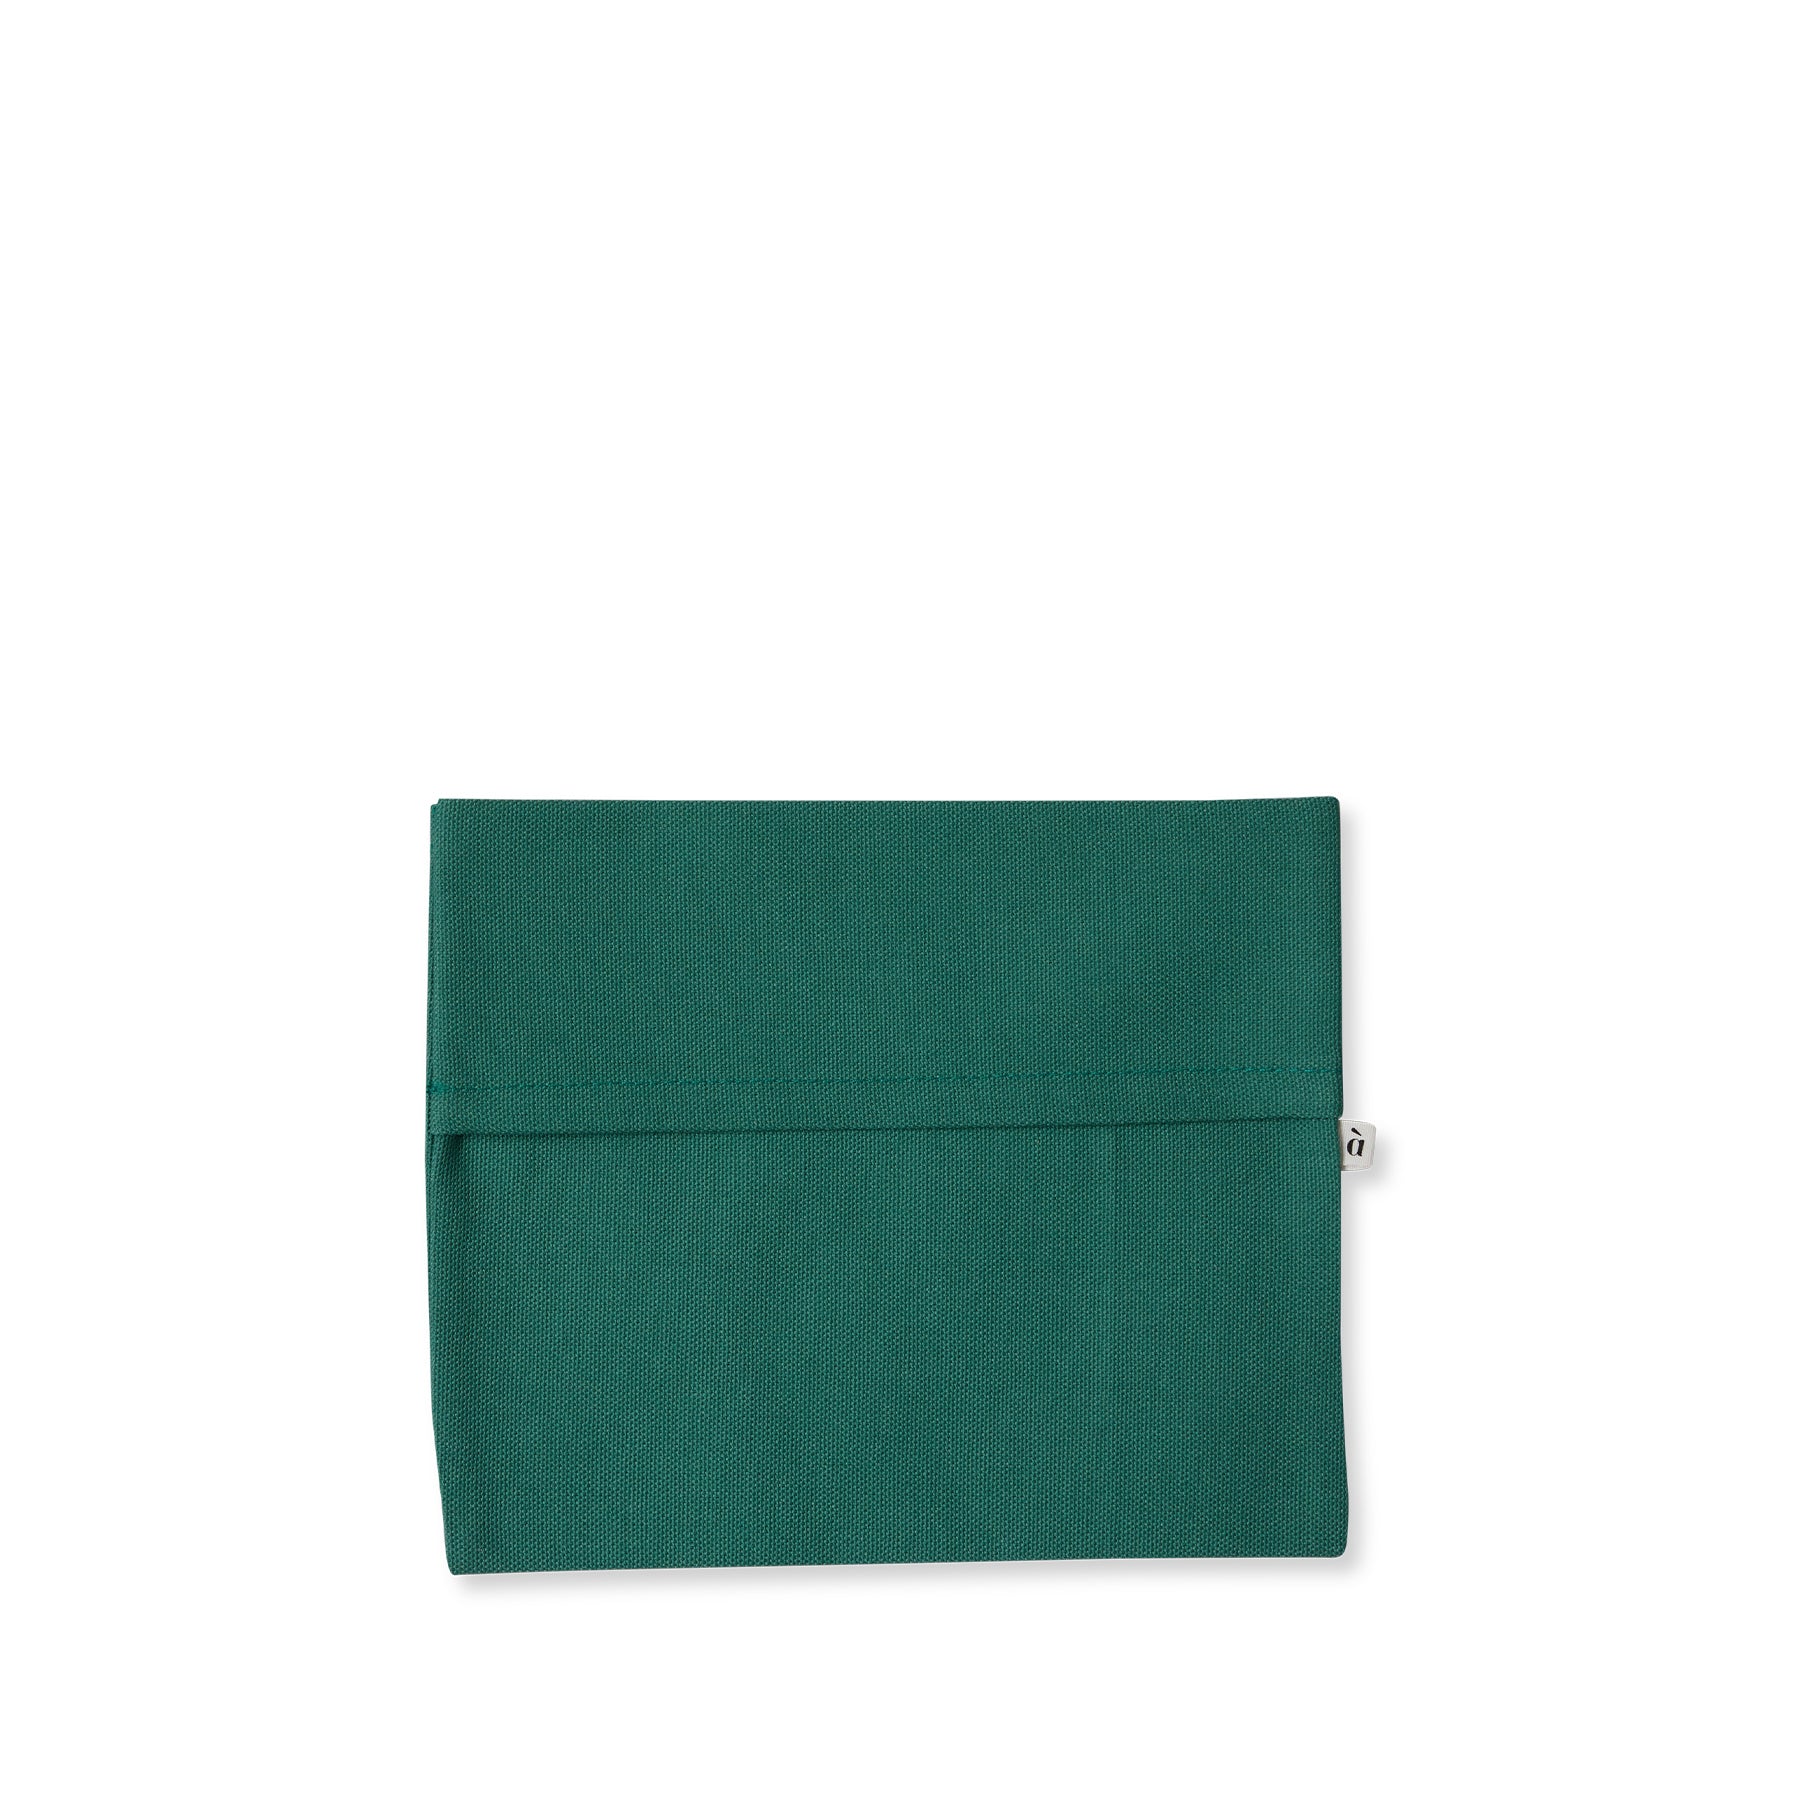 Pochette Extra Small in Emerald Zoom Image 1